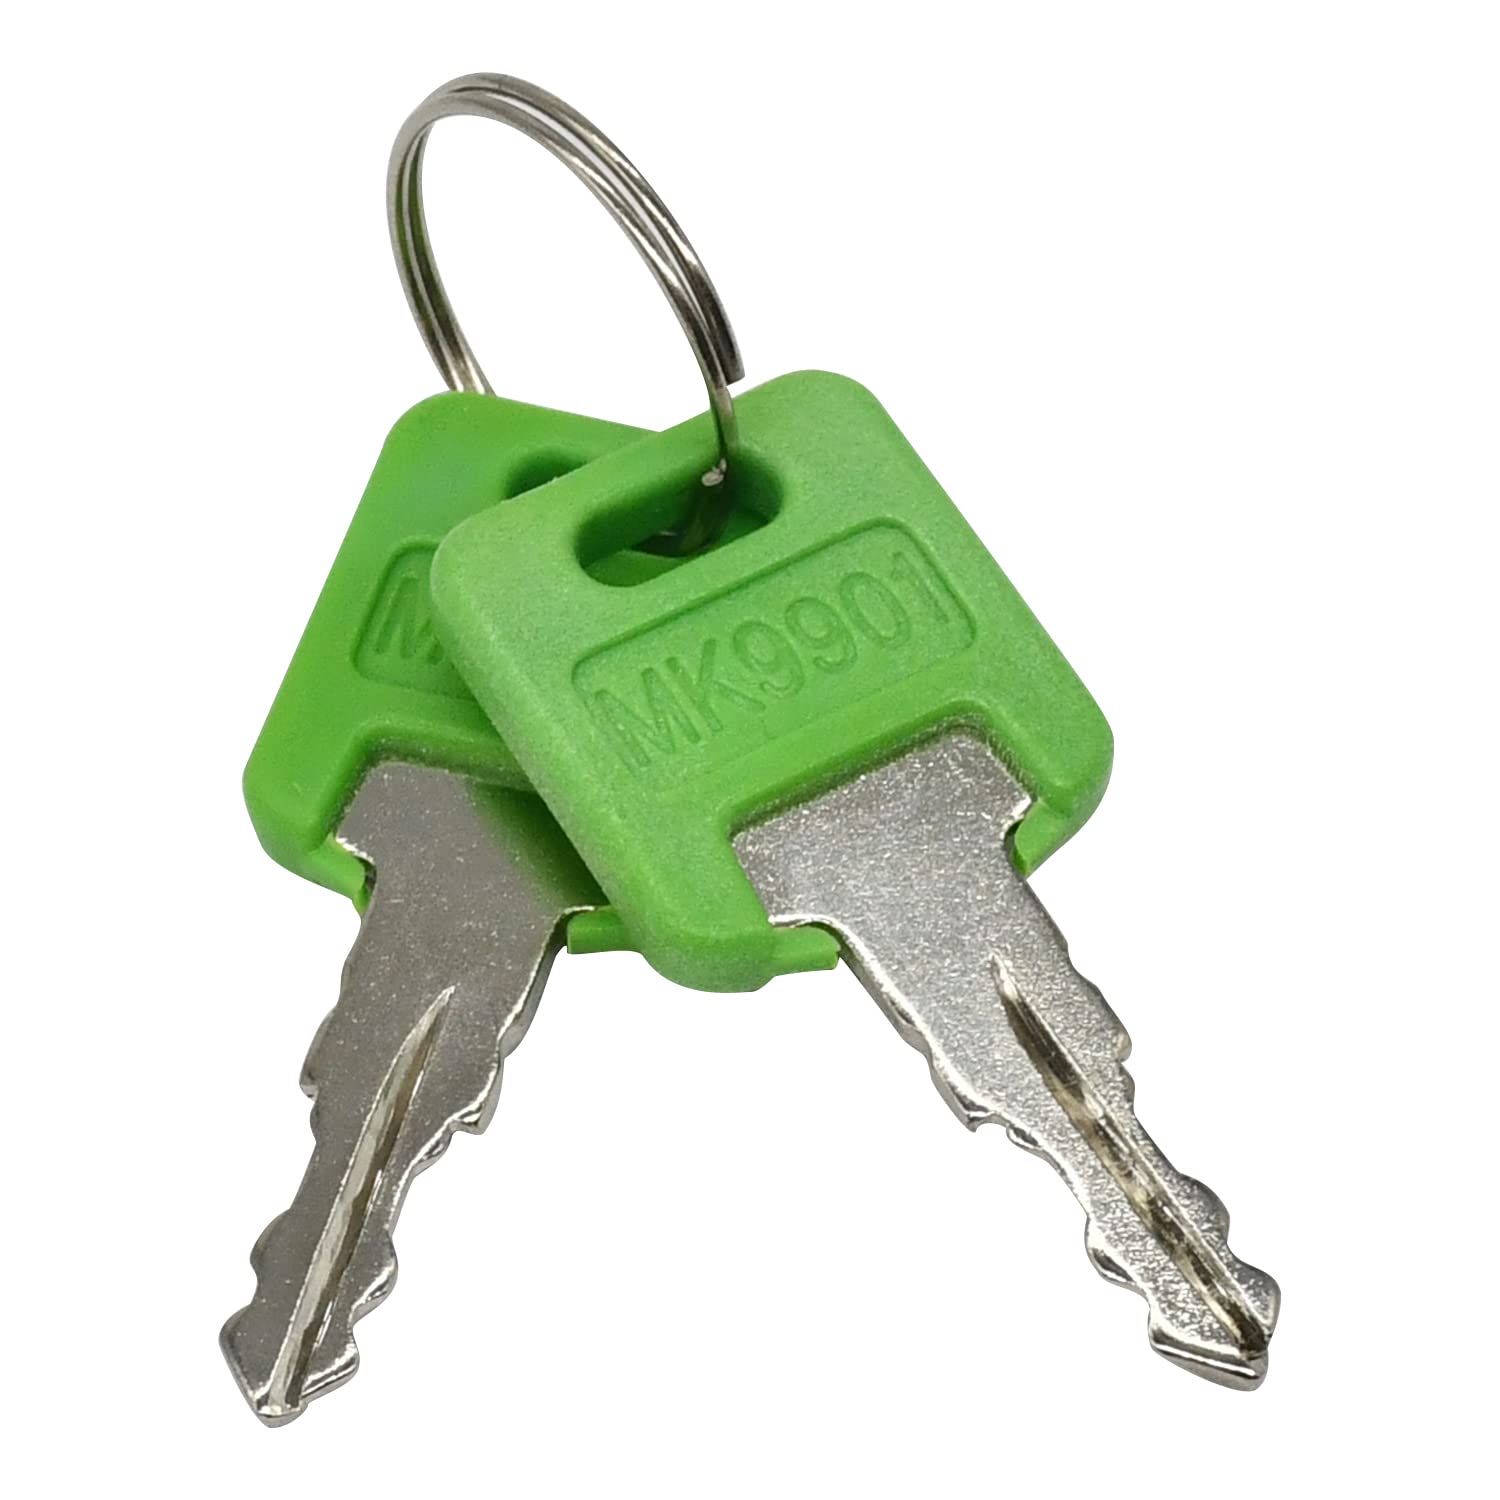 Notonparts RV Keys MK9901 6601 Motorhome Green Master Keys 2 PCS Compatible